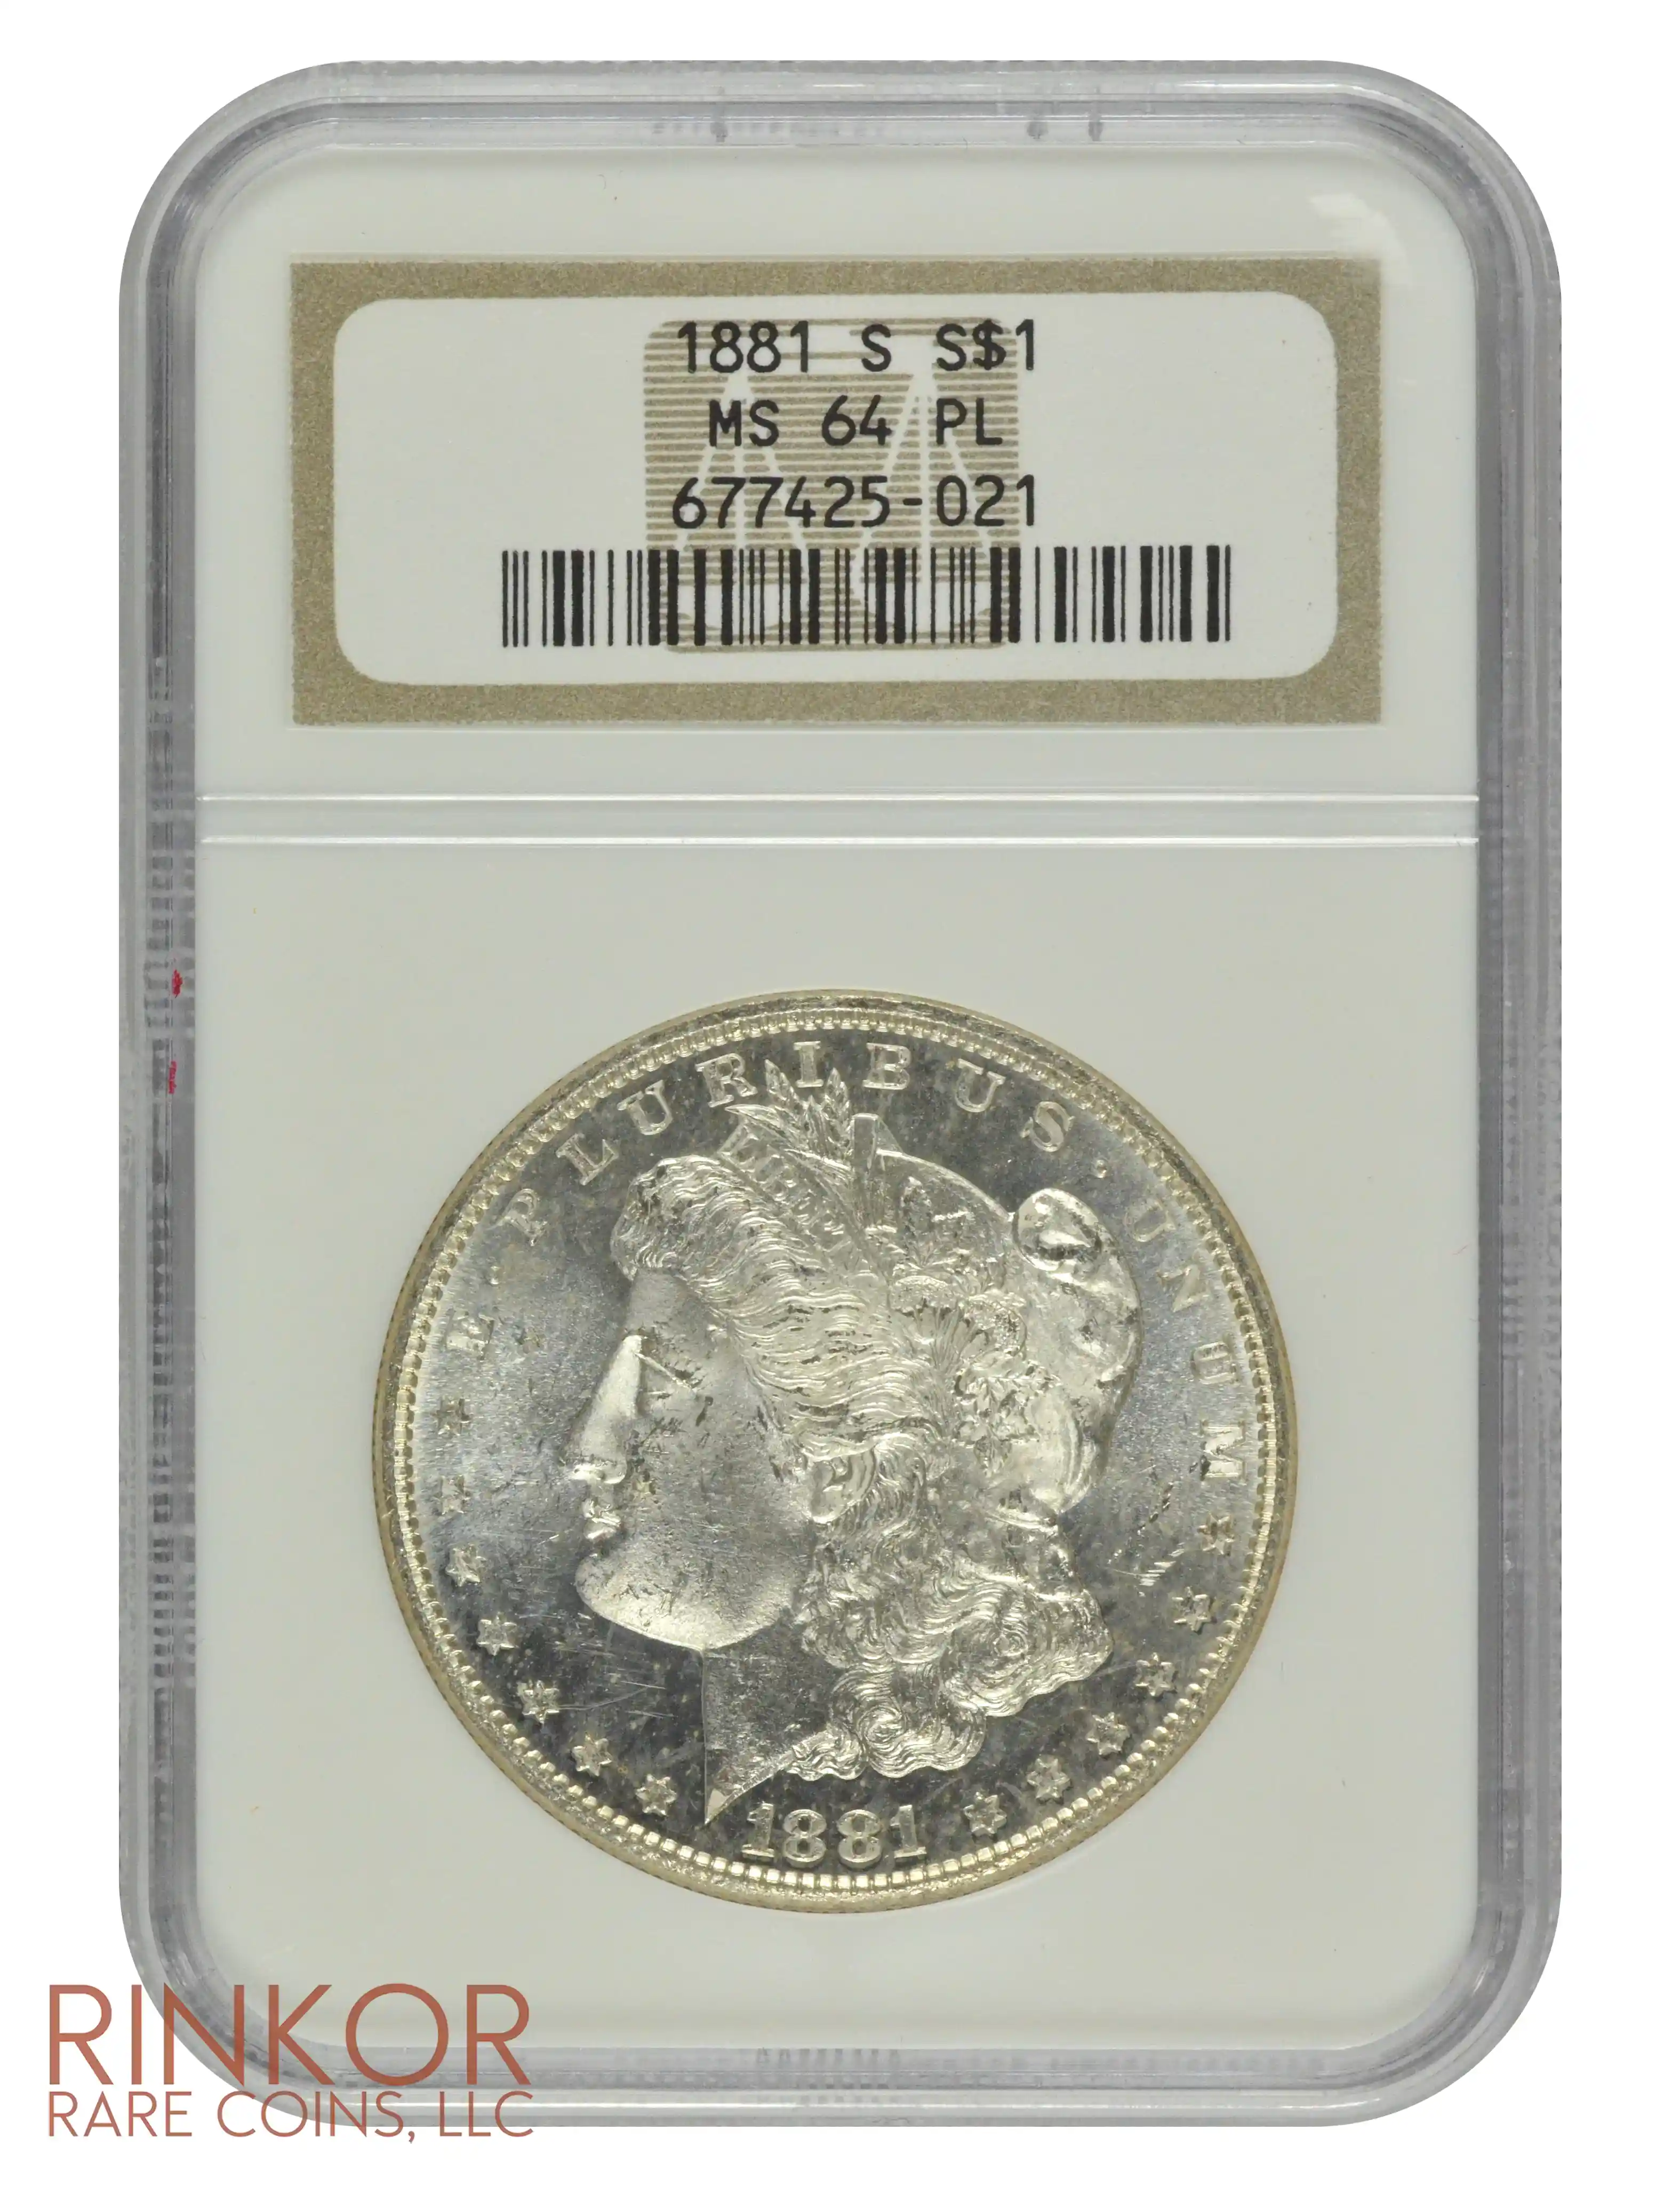 1881-S $1 NGC MS 64 PL